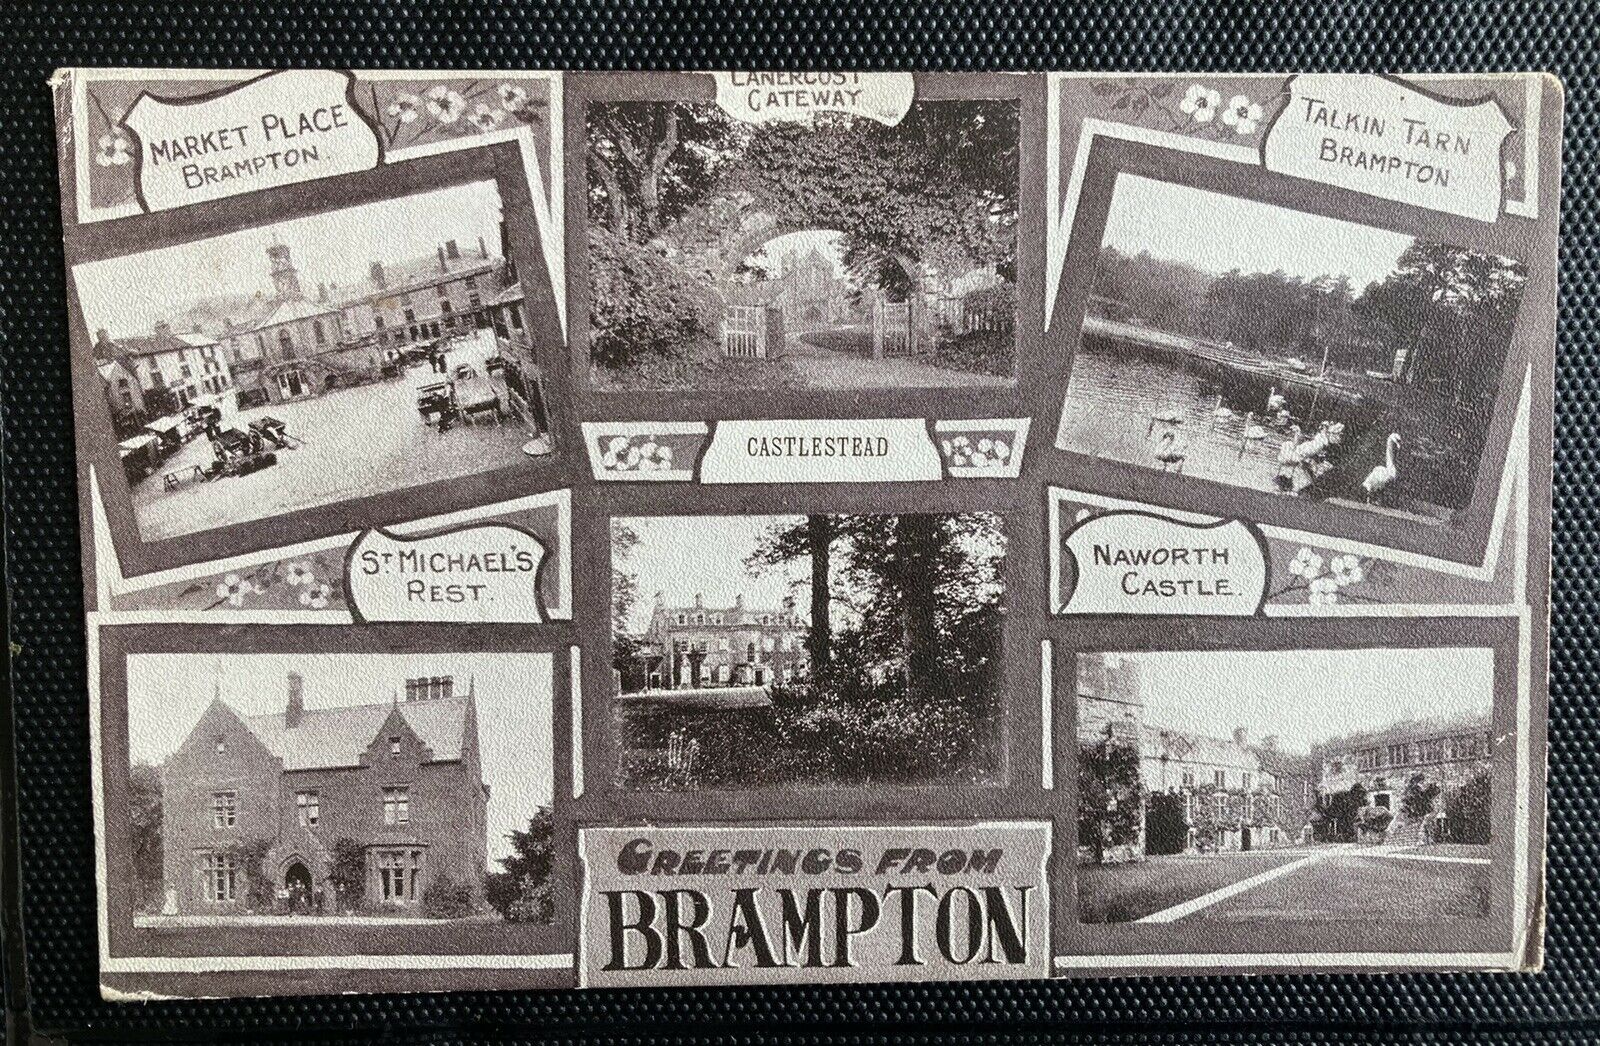 House Clearance - Brampton - Carlisle - Cumbria - Market Place - A Vintage Montage Service